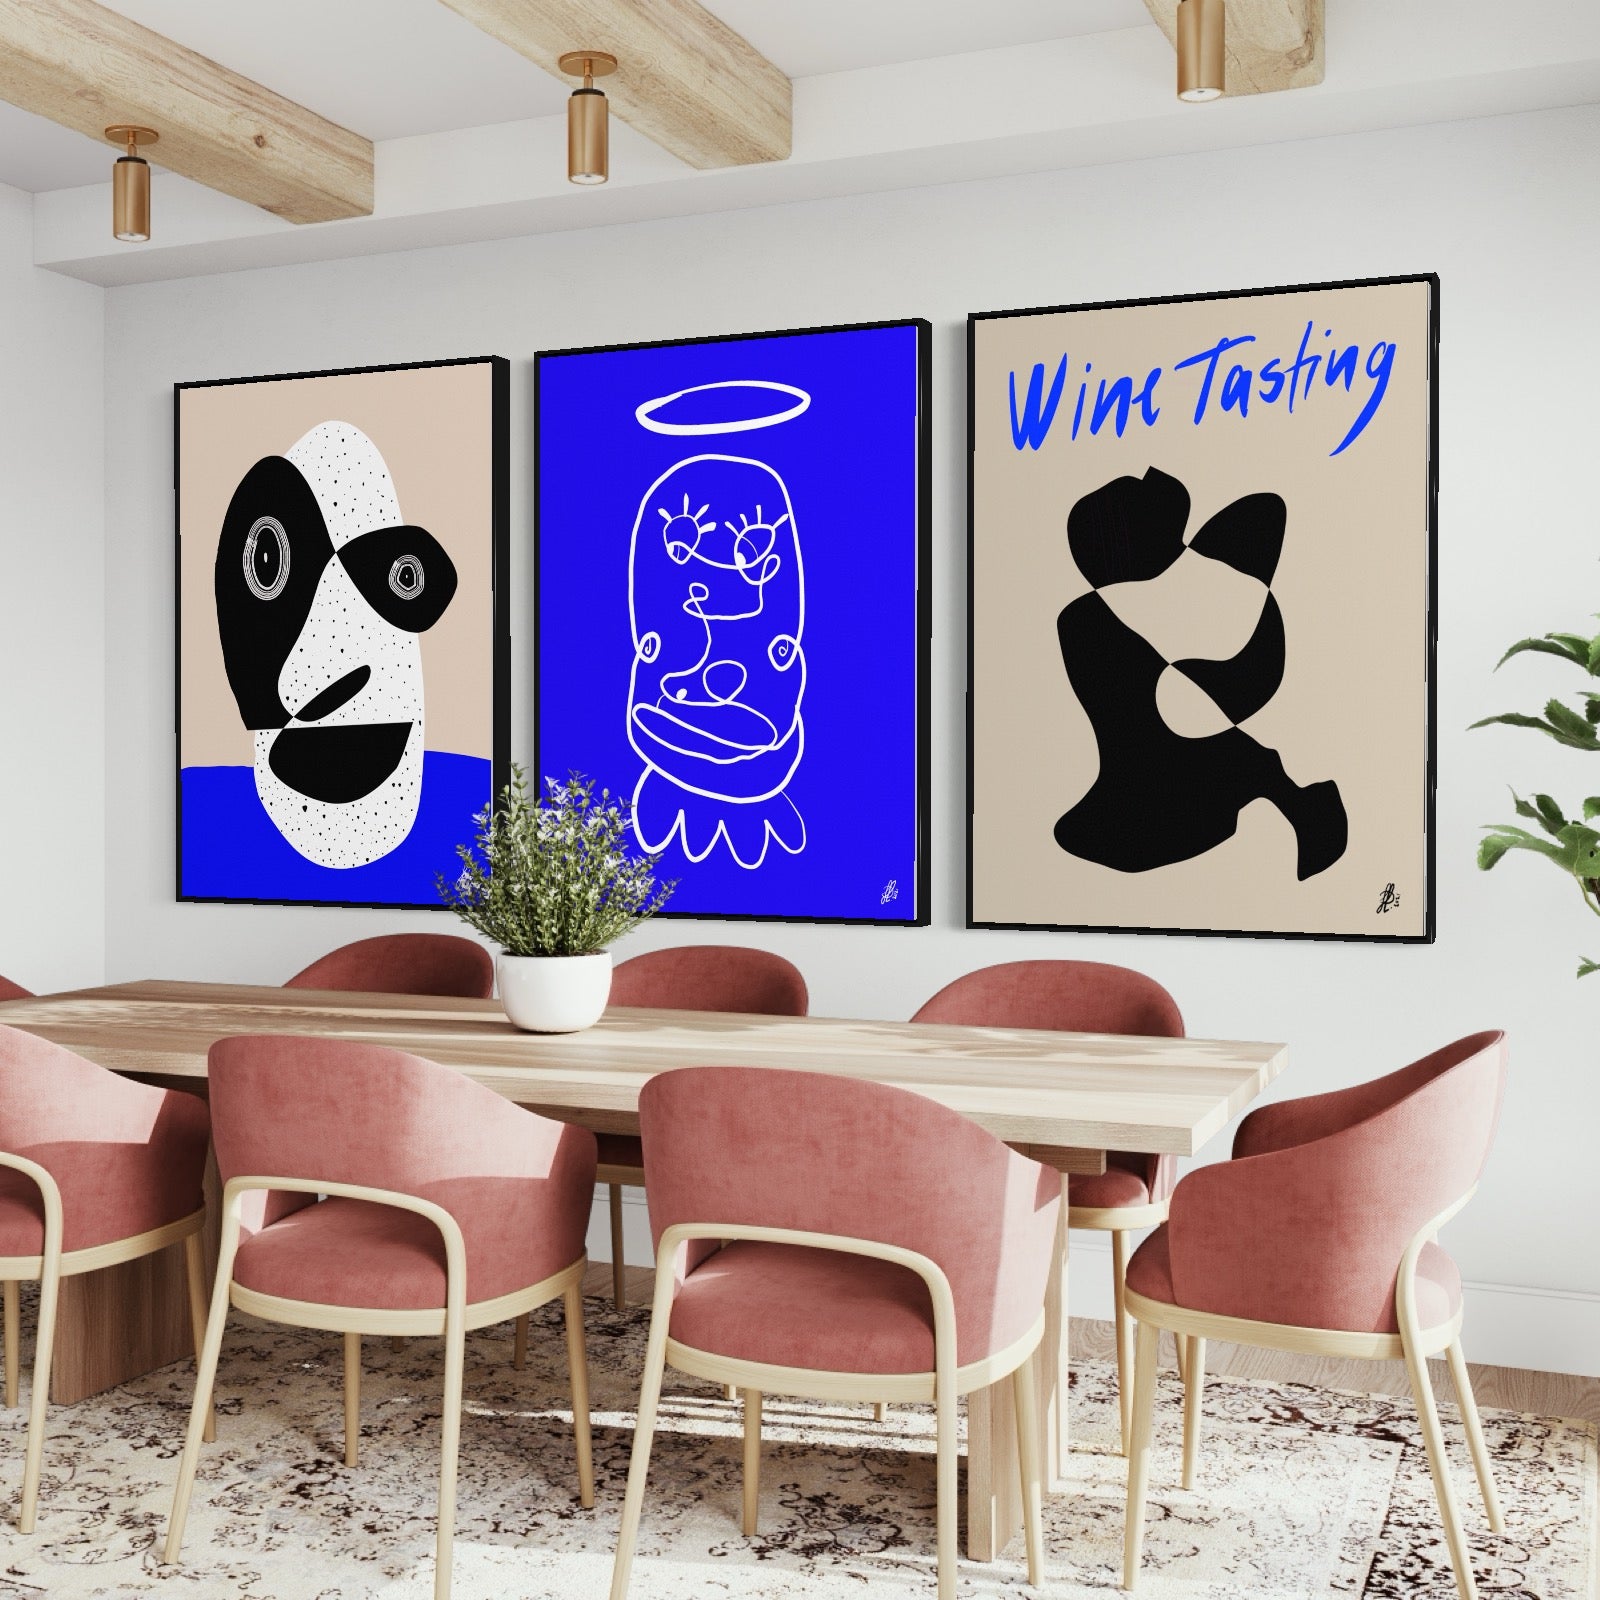 Art Wall 10 (3 Posters) - Allan, Peter, Wine Tasting #1